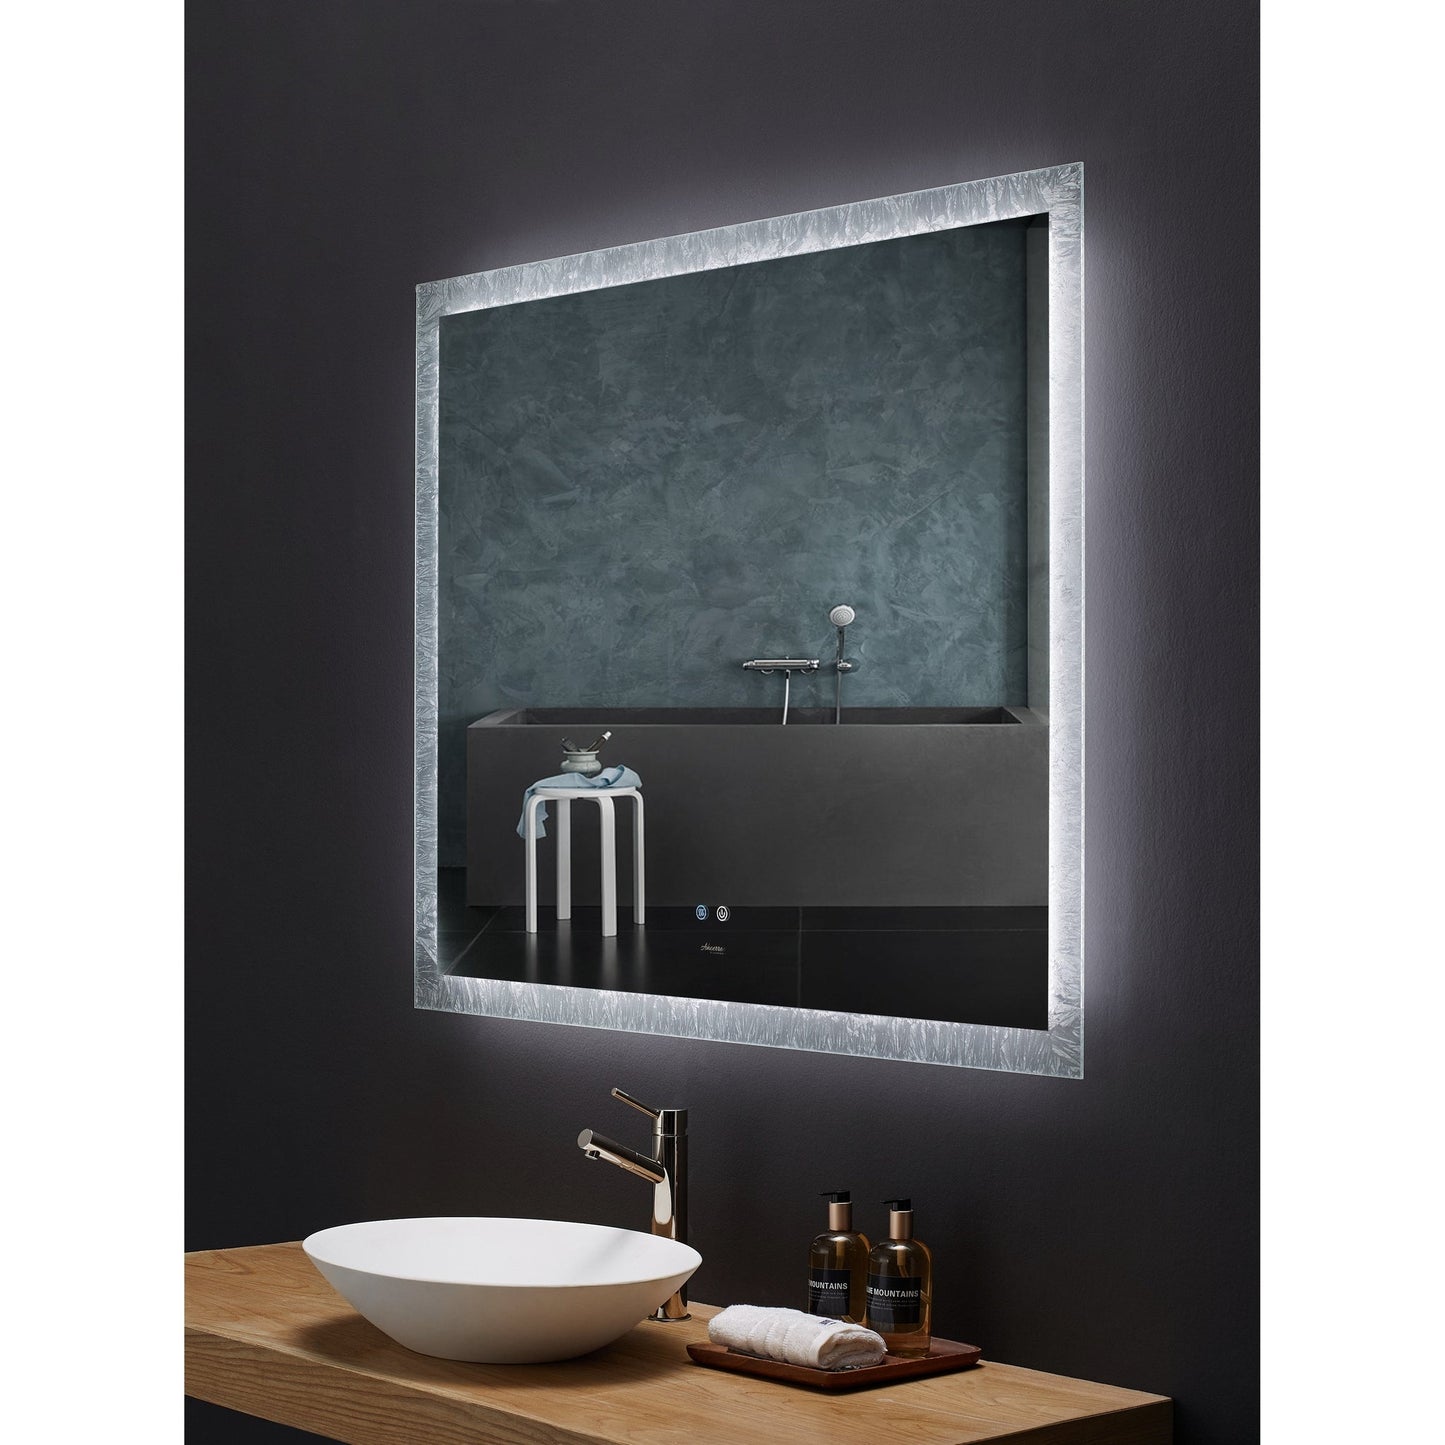 Ancerre Designs Frysta 48" x 40" Modern Rectangular LED Lighted Frameless Bathroom Vanity Mirror With Defogger, Dimmer and Mounting Hardware